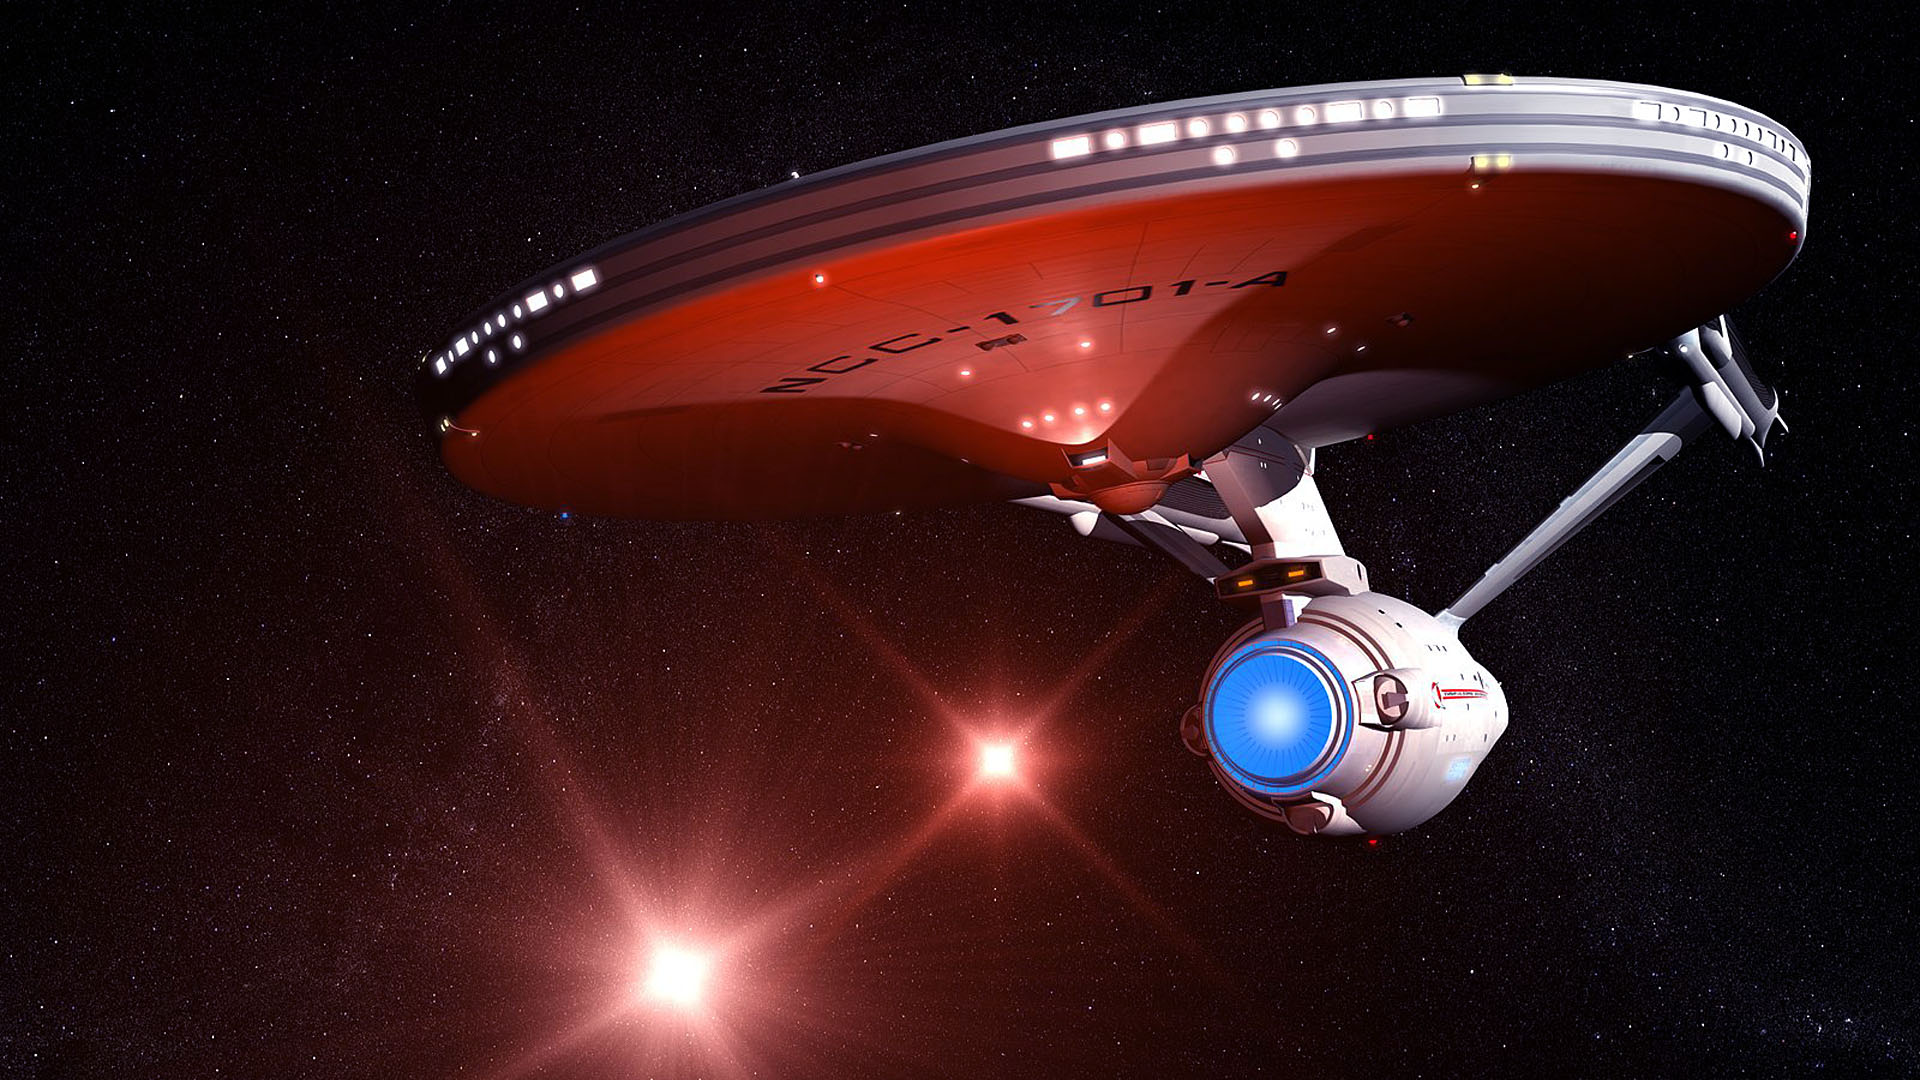 enterprise (star trek), star trek, sci fi